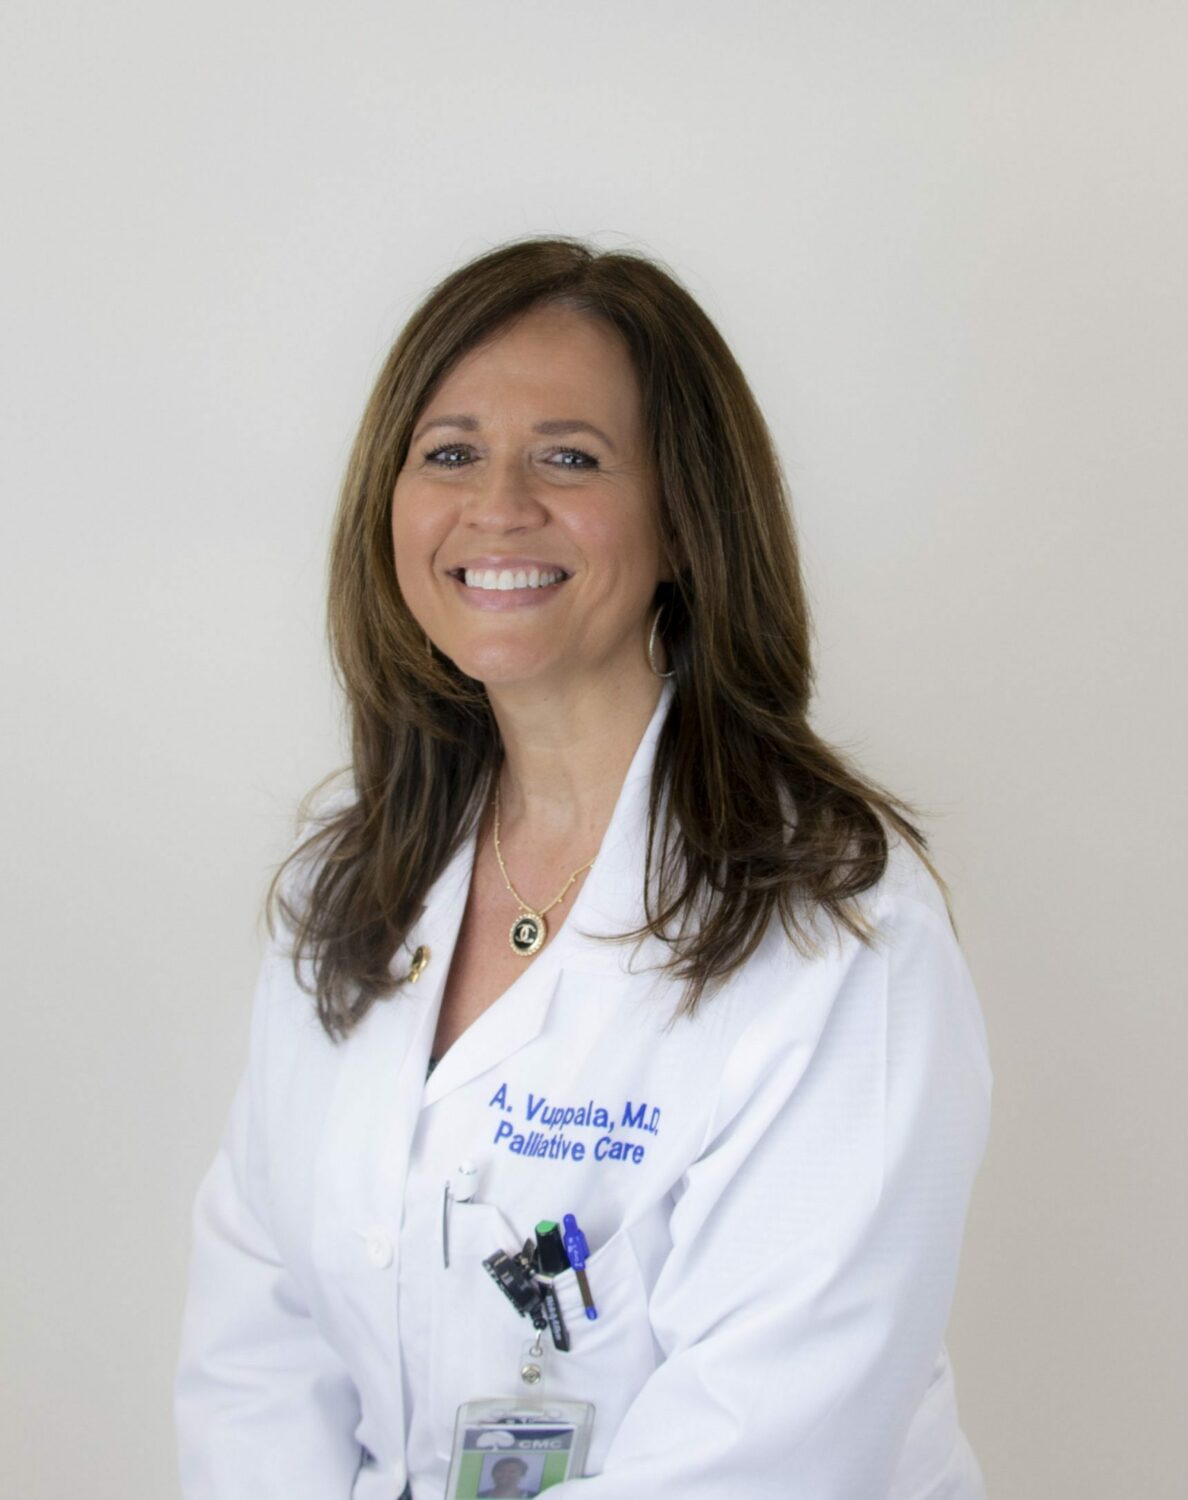 Getting to know Dr. Amanda Vuppala